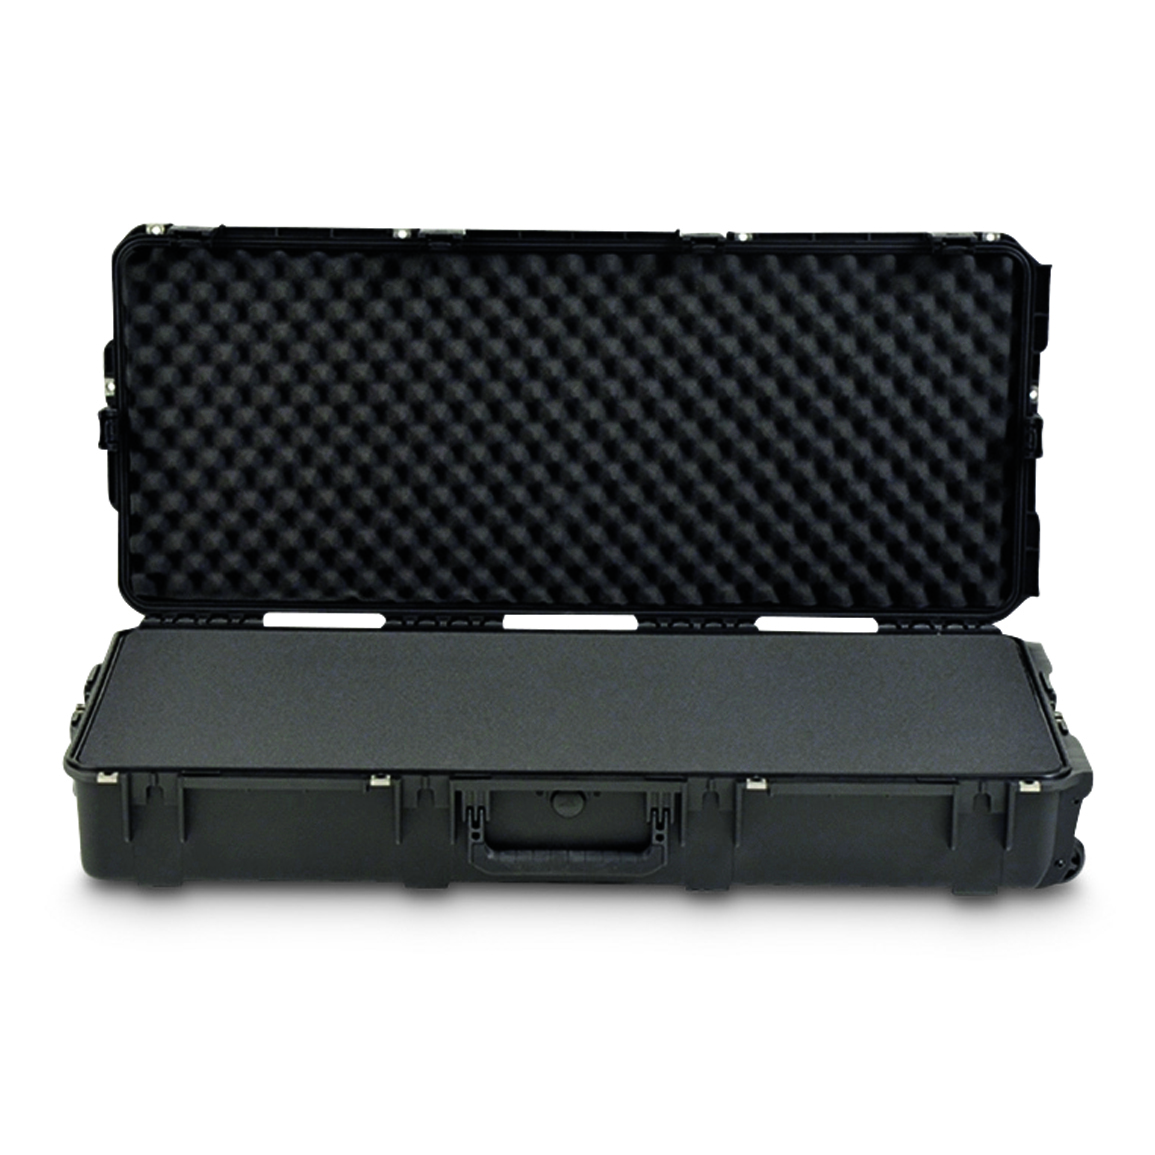 SKB iSeries 4217-7 Wheeled Hard Case, 45x19.75x8.25"h., Black